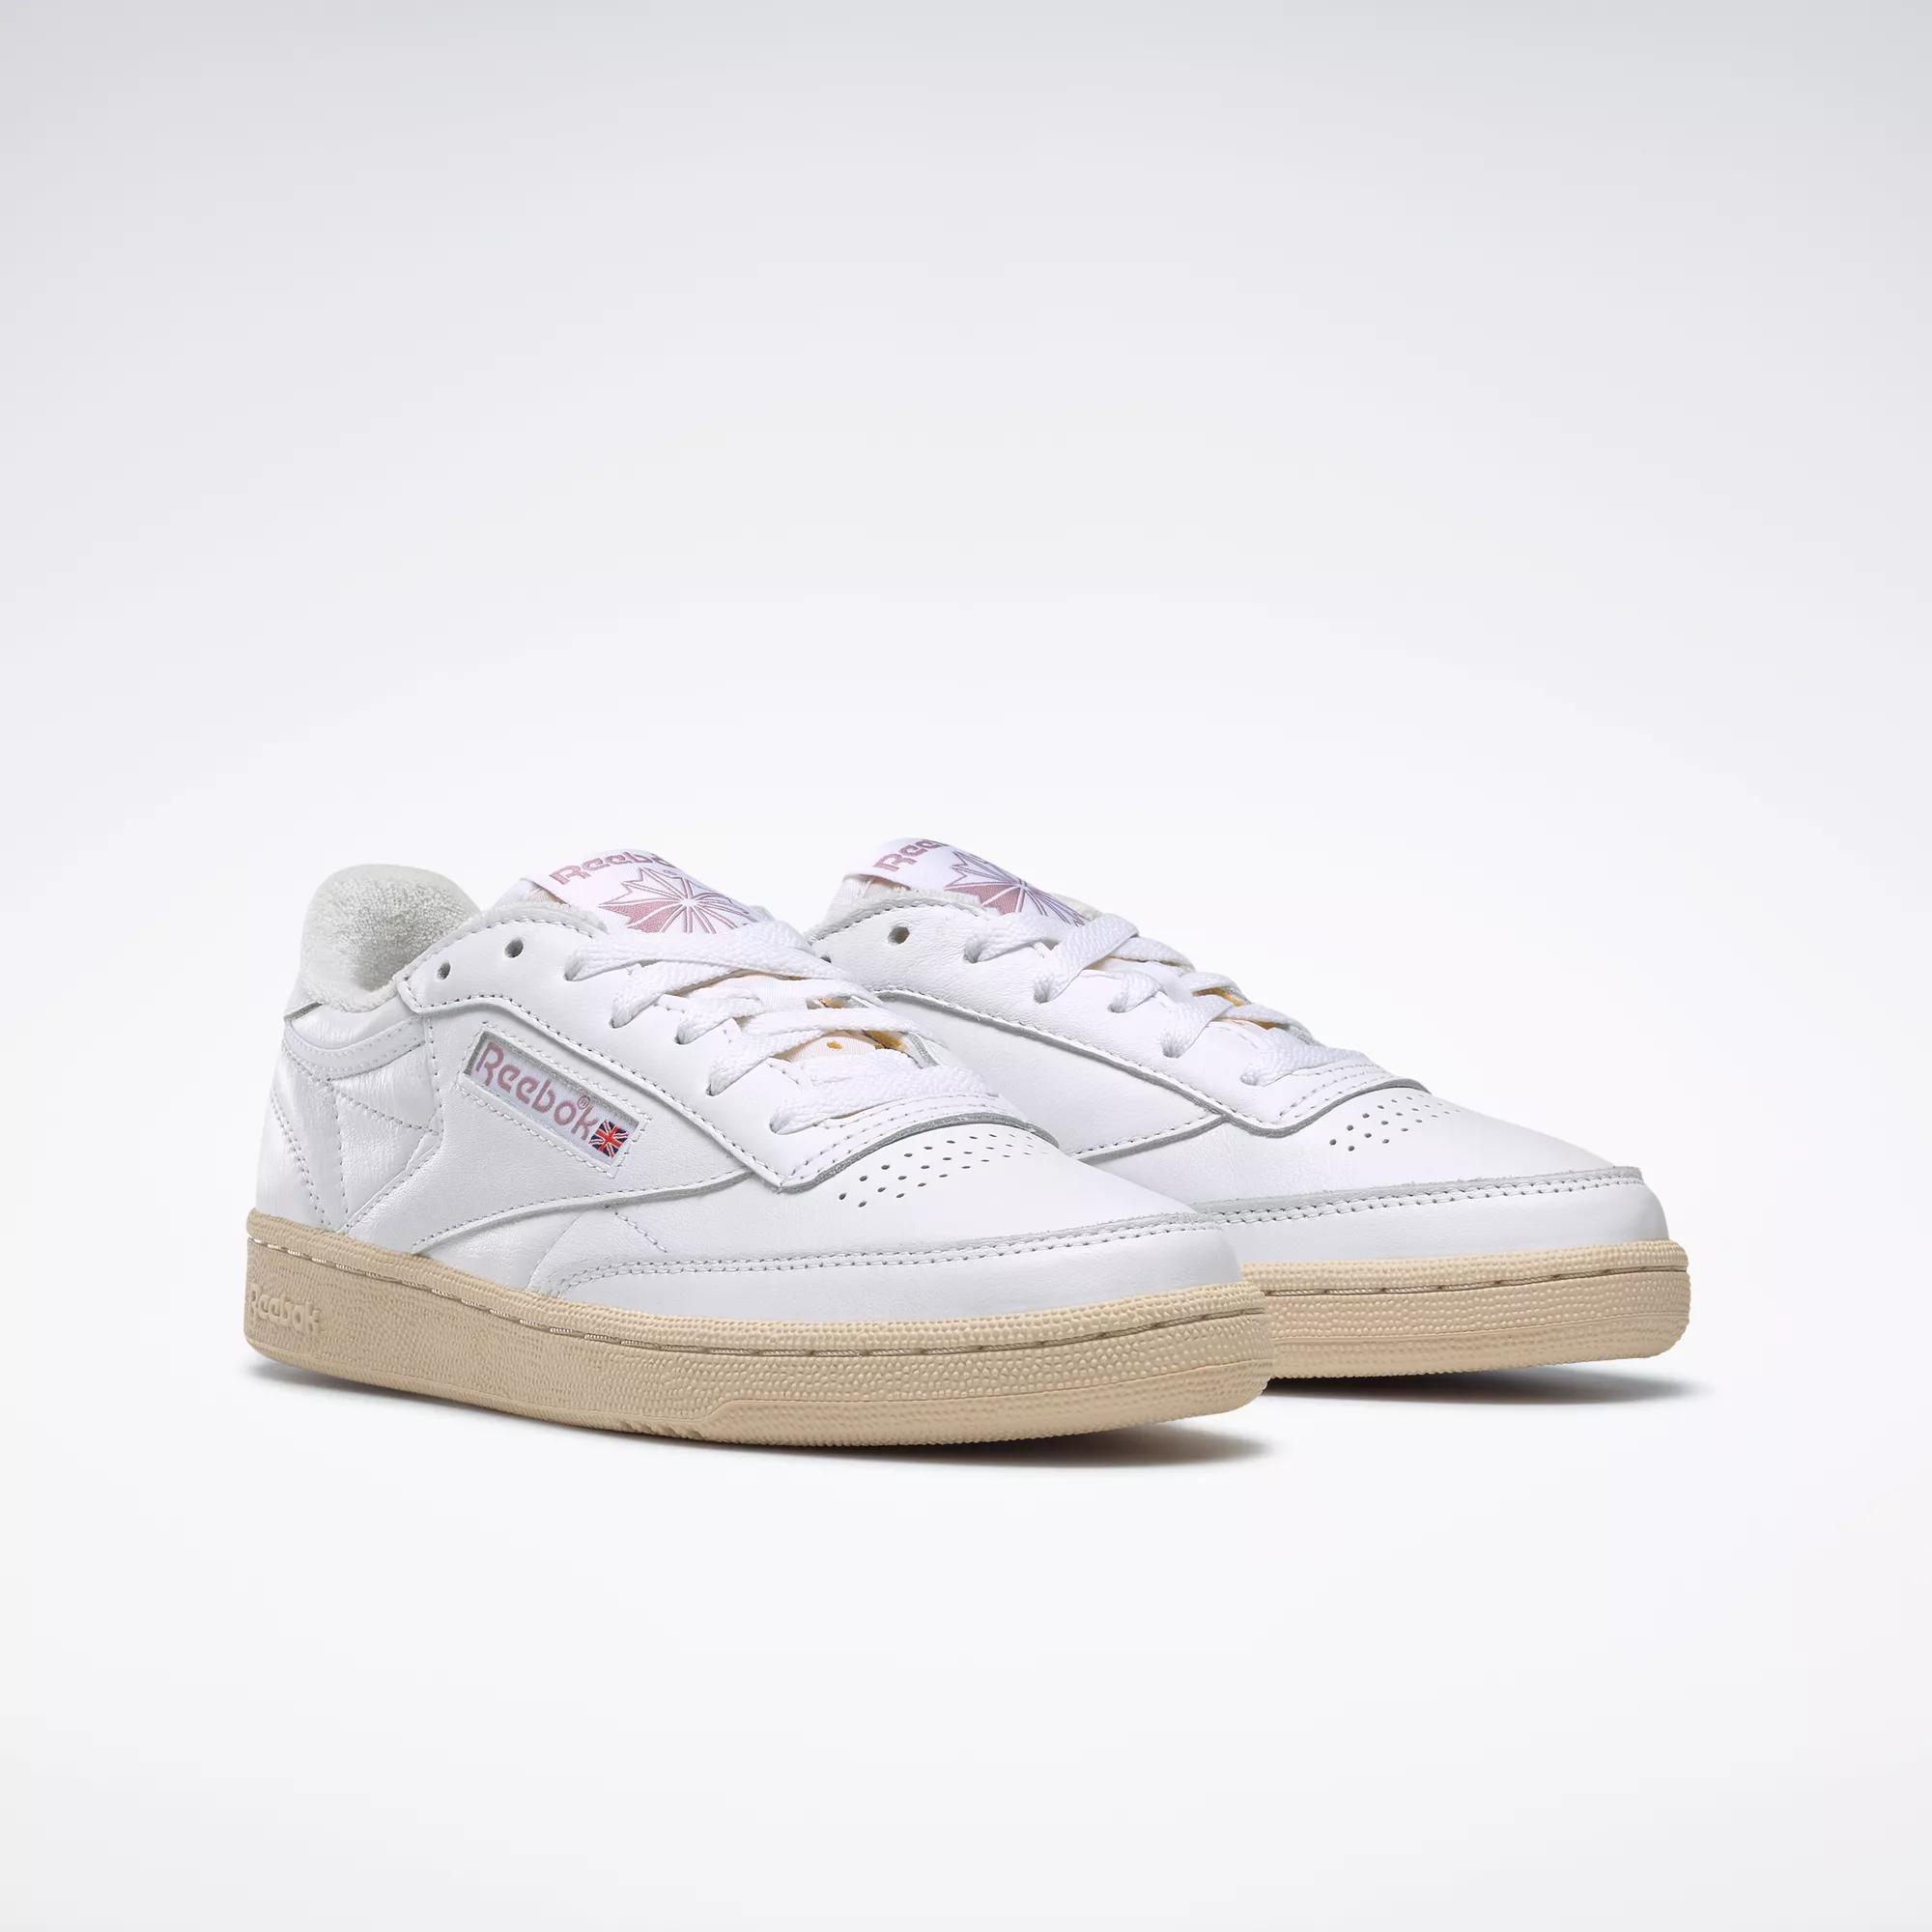 Club C | 85 Lilac / Infused - Reebok Shoes Chalk / Vintage White